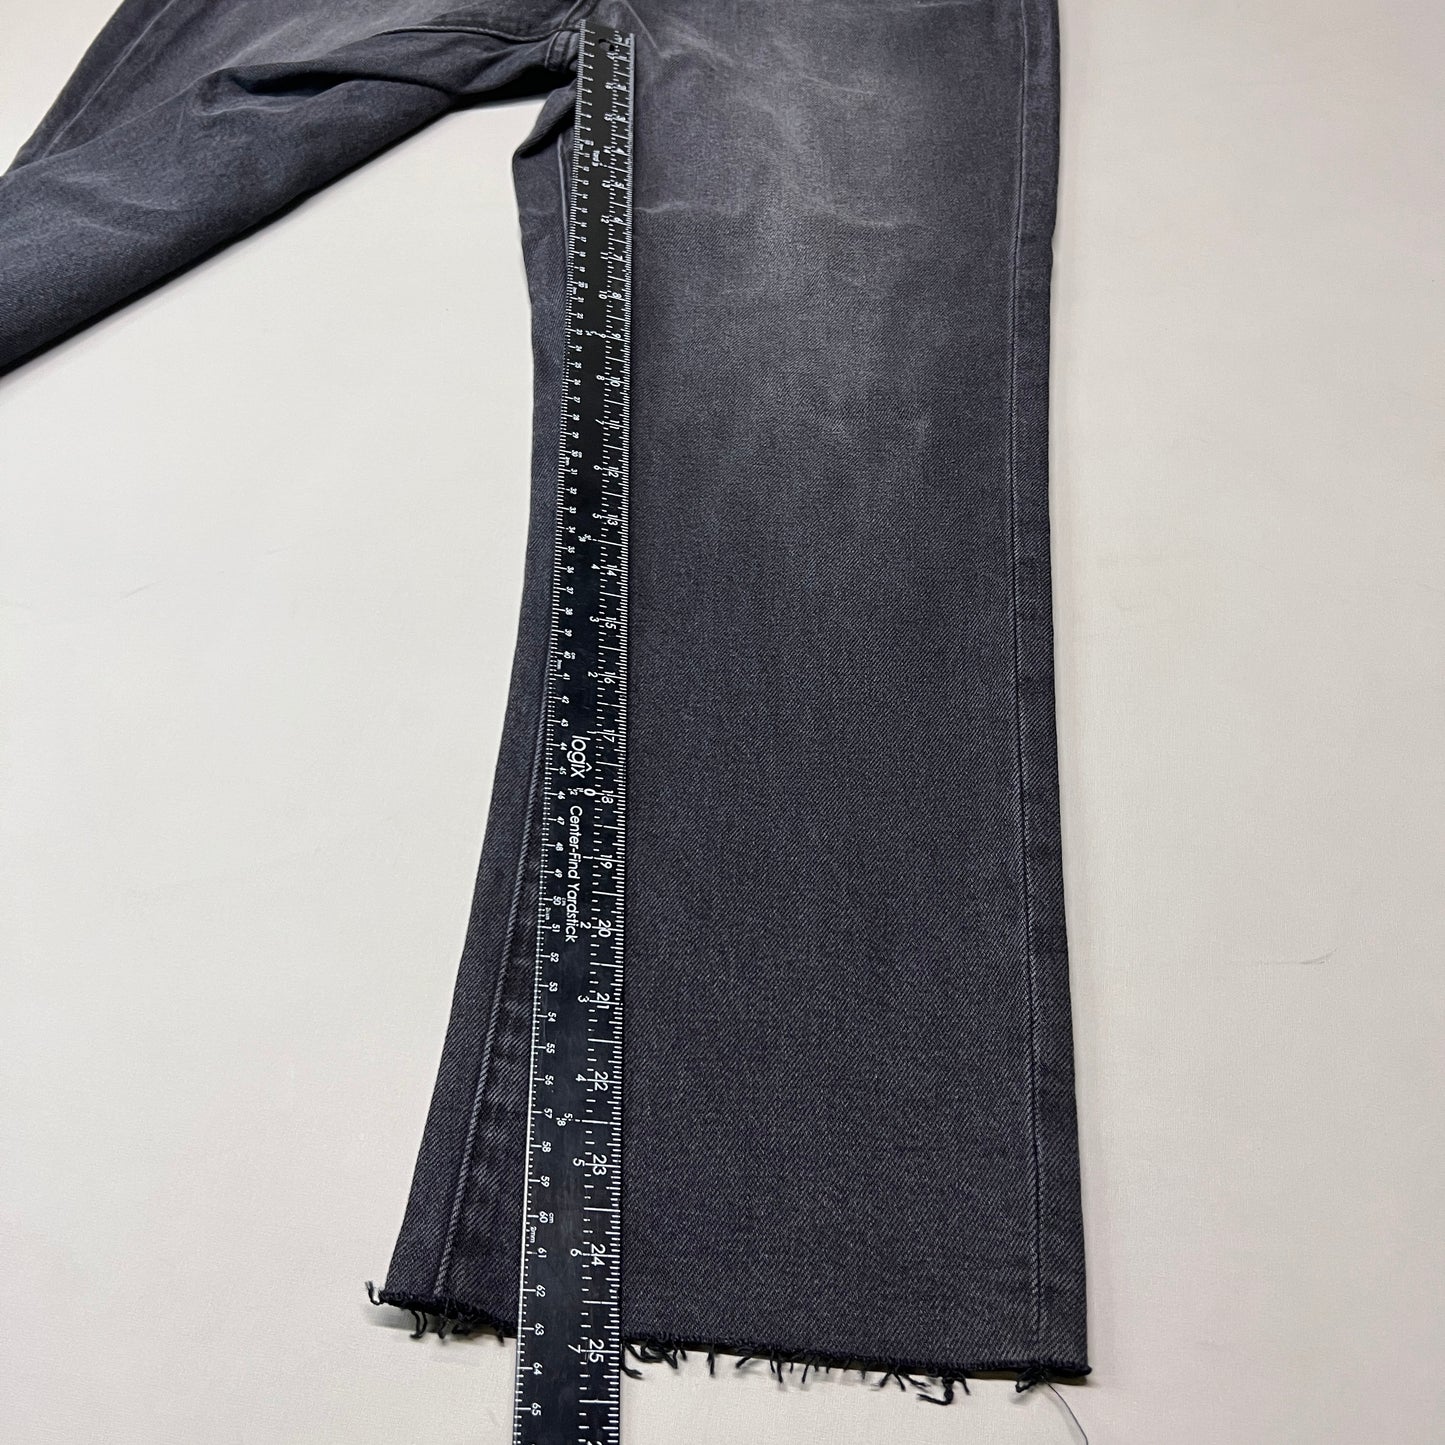 ARTICLES OF SOCIETY Kate Eleele Raw Hem Cropped Jeans Women's Sz 28 Black 4810TQB-720 (New)